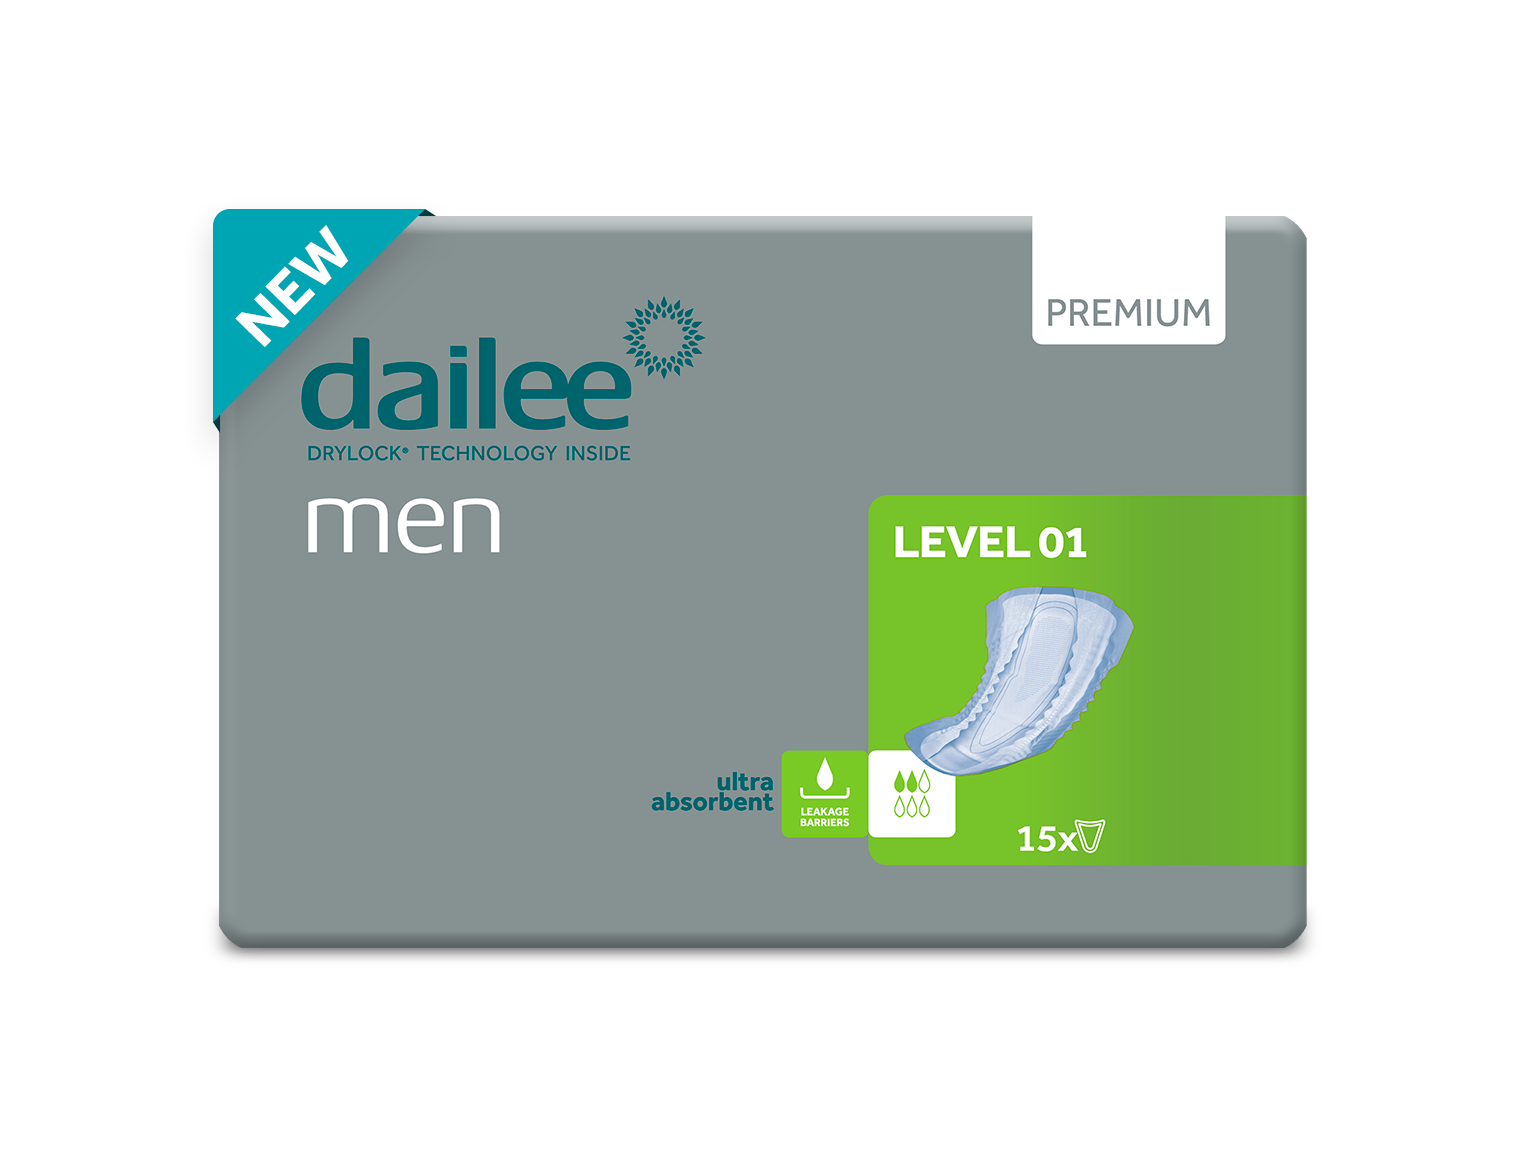 dailee_men_premium_level_1_thumb